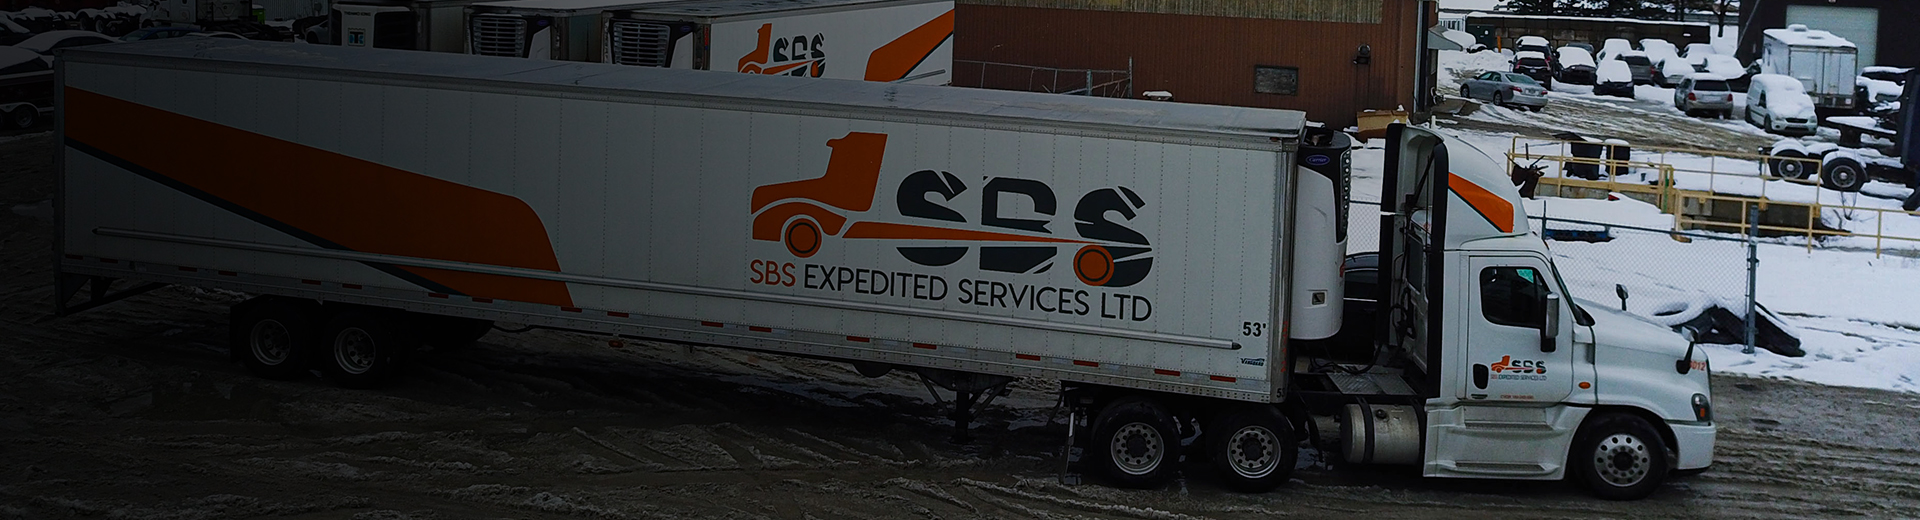 SBS Expedited Truck